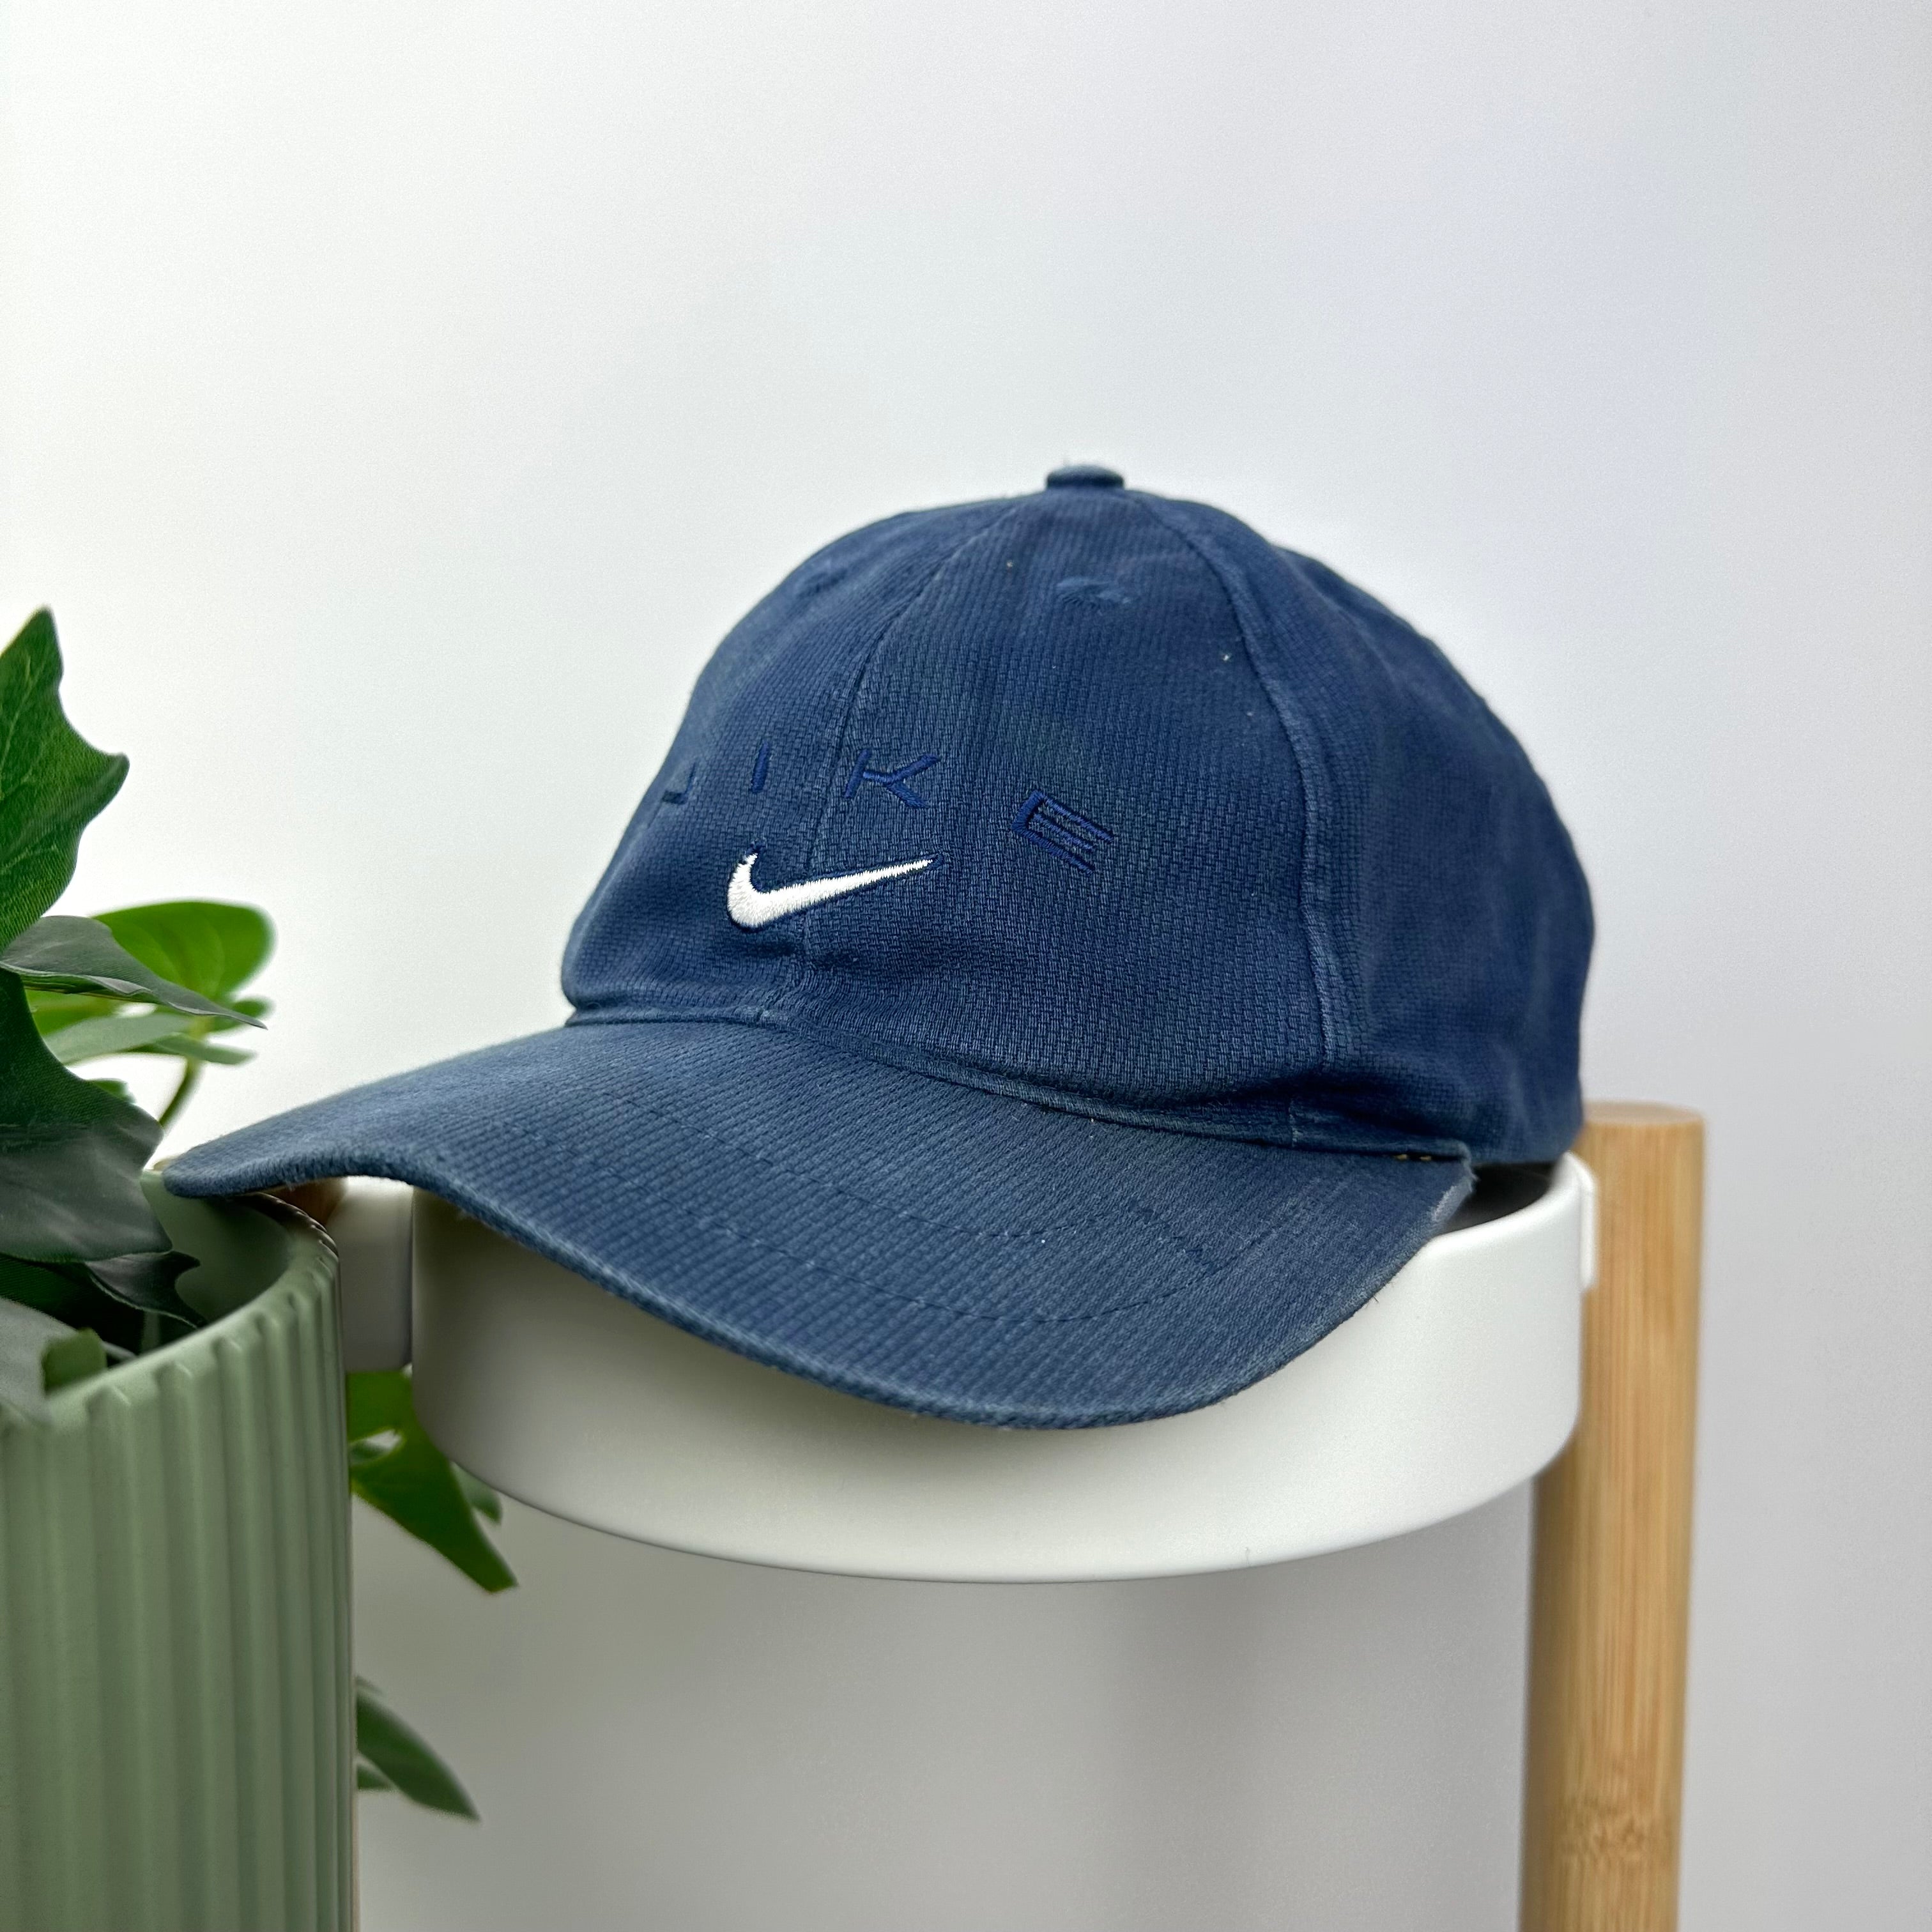 Nike Navy Cap